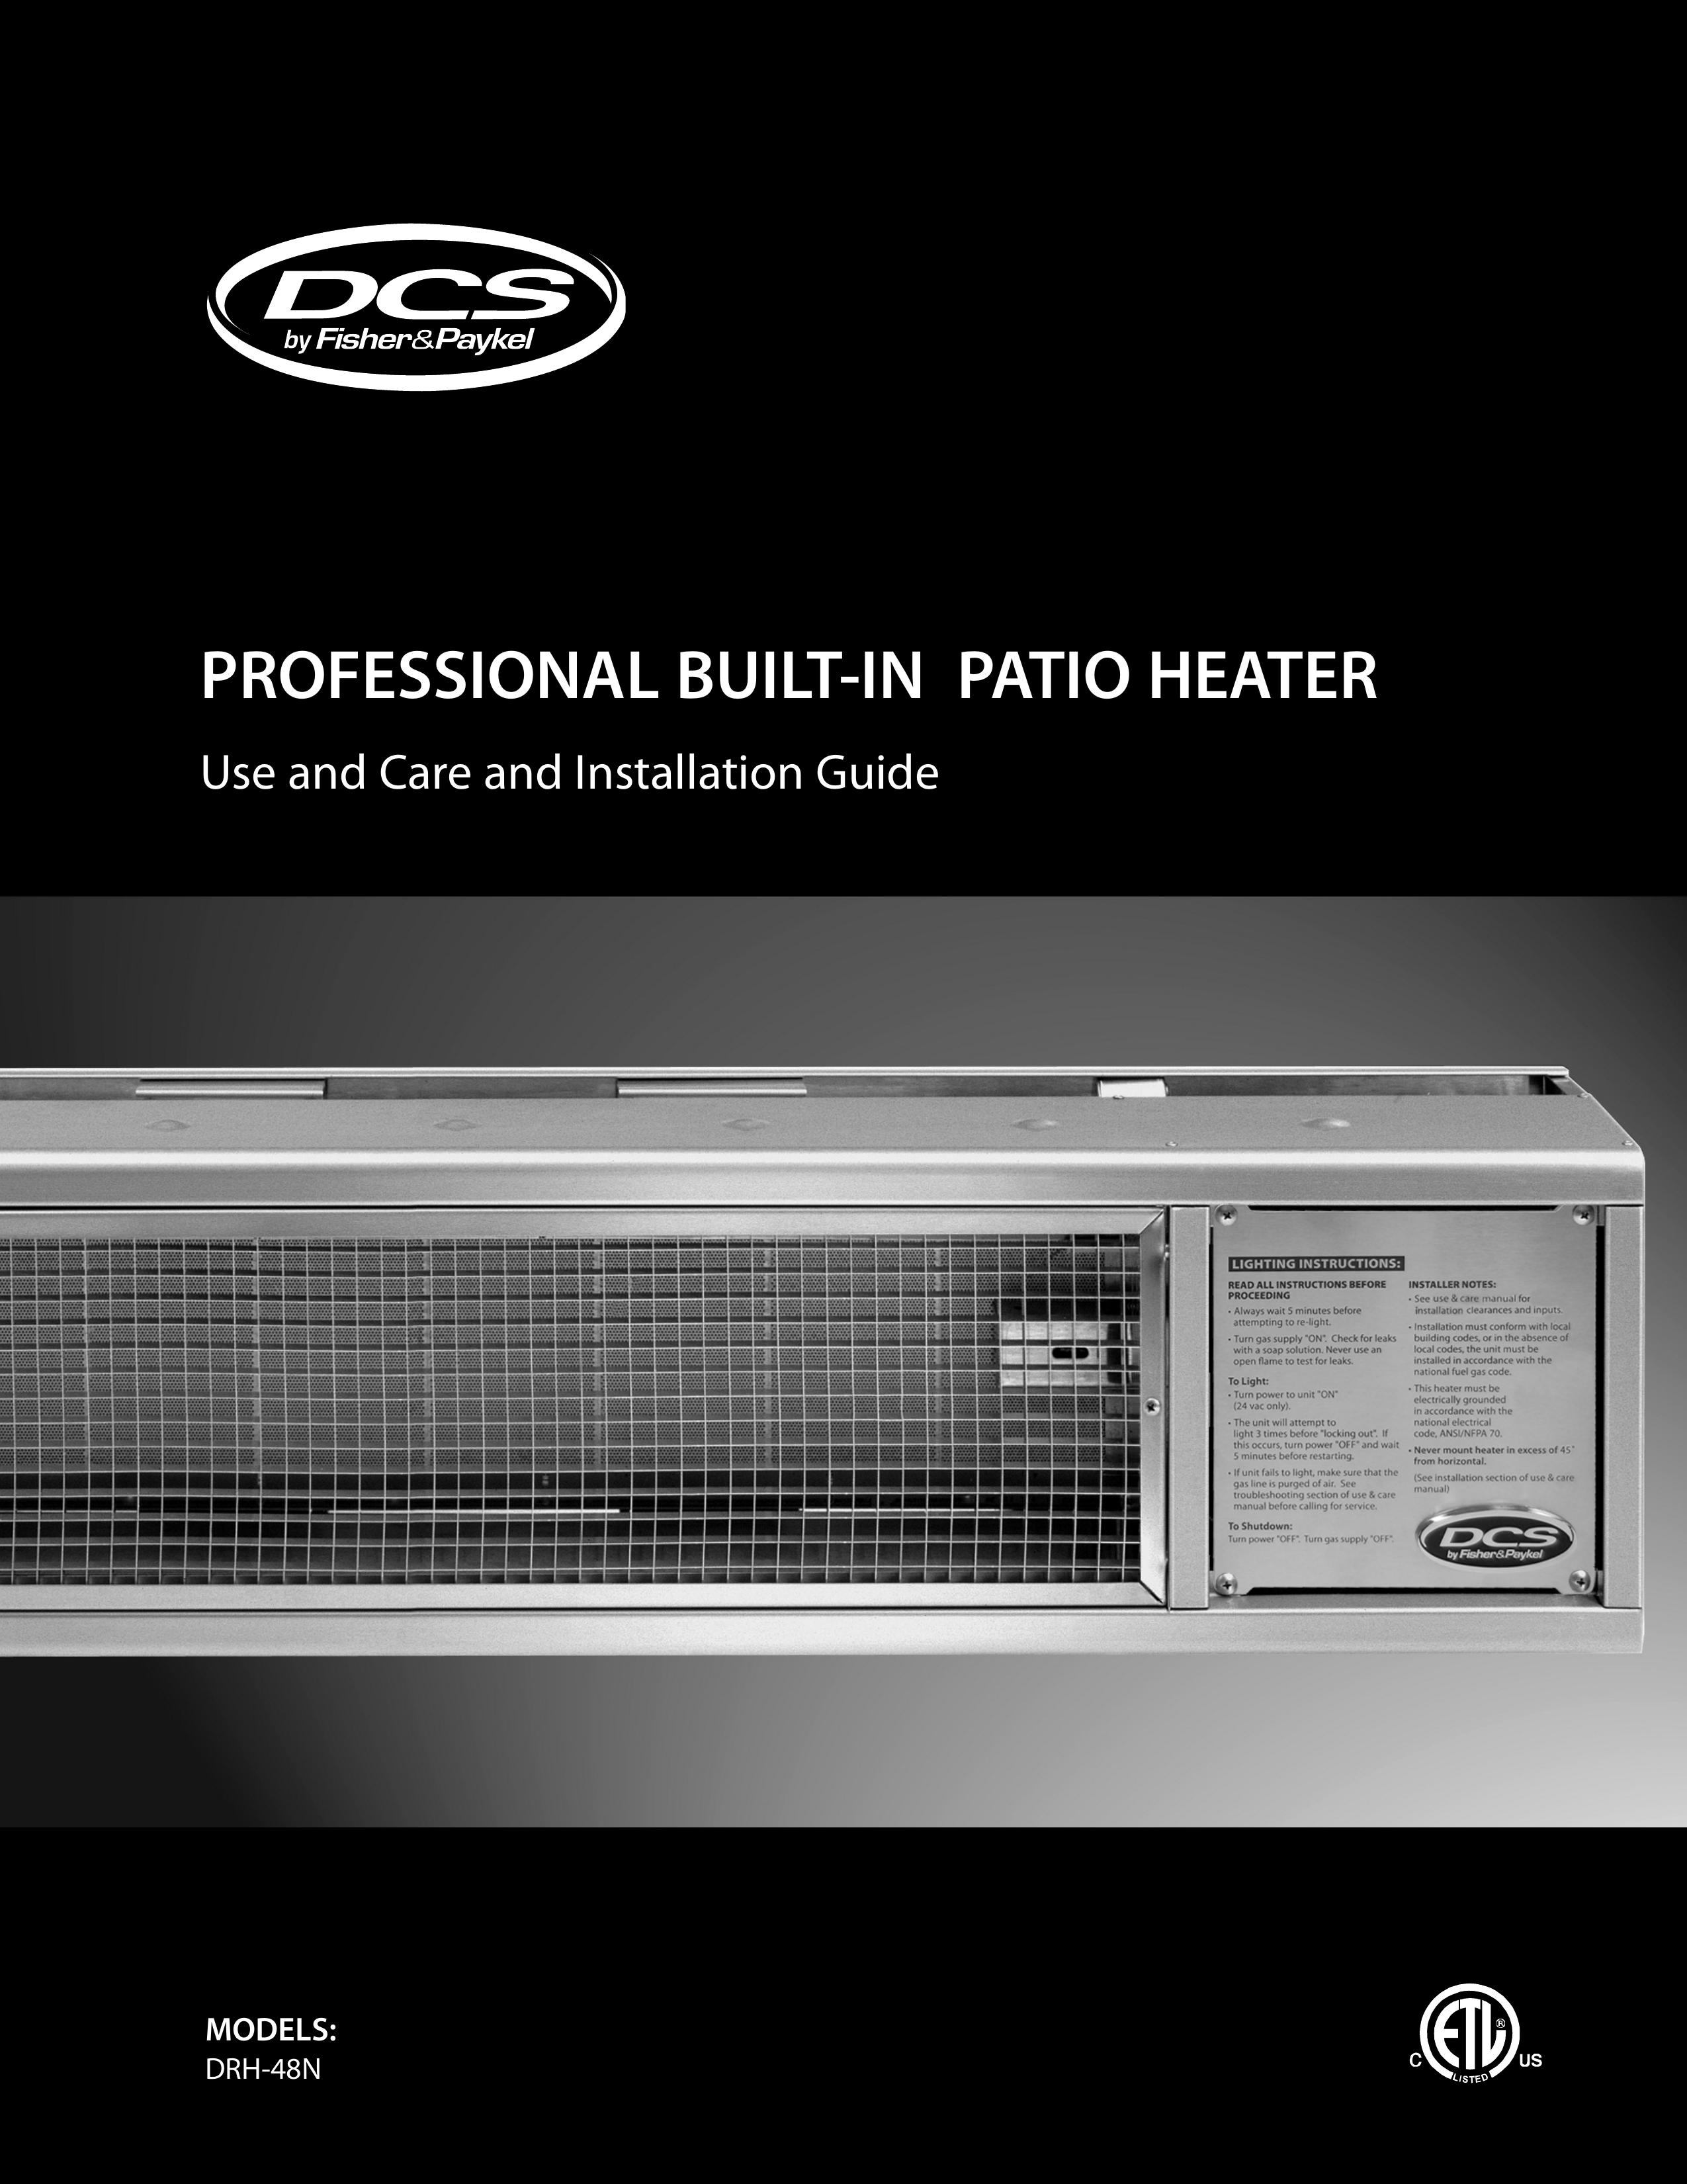 DCS DRH-48N Patio Heater User Manual